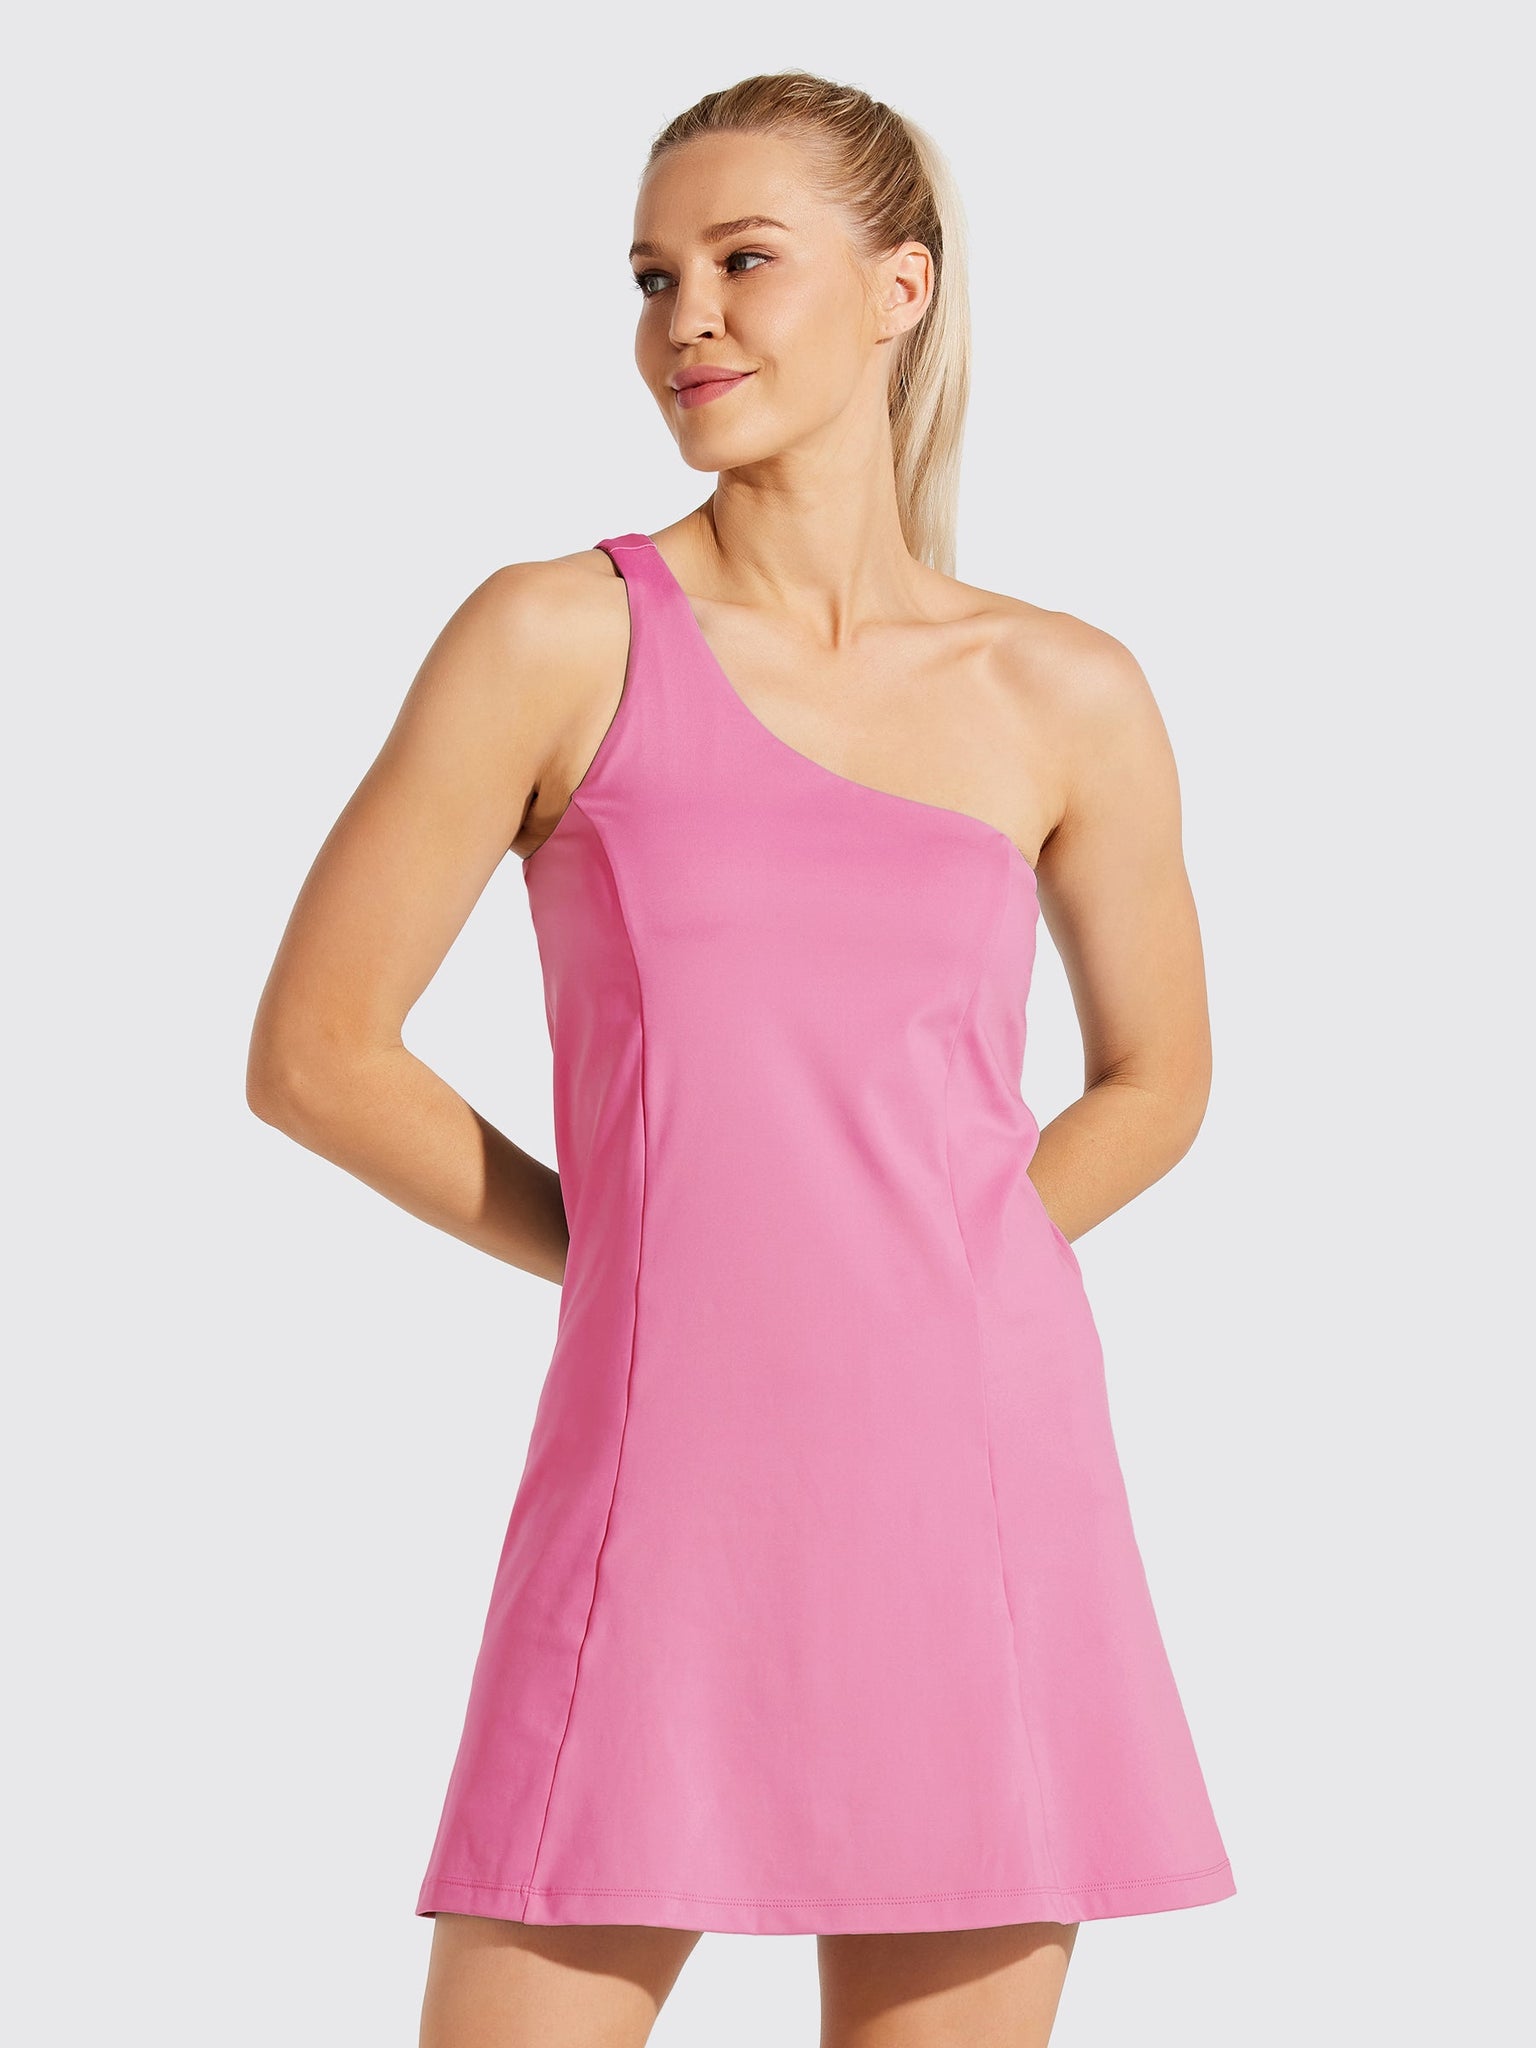 Willit Women's One Shoulder Dress_Pink2